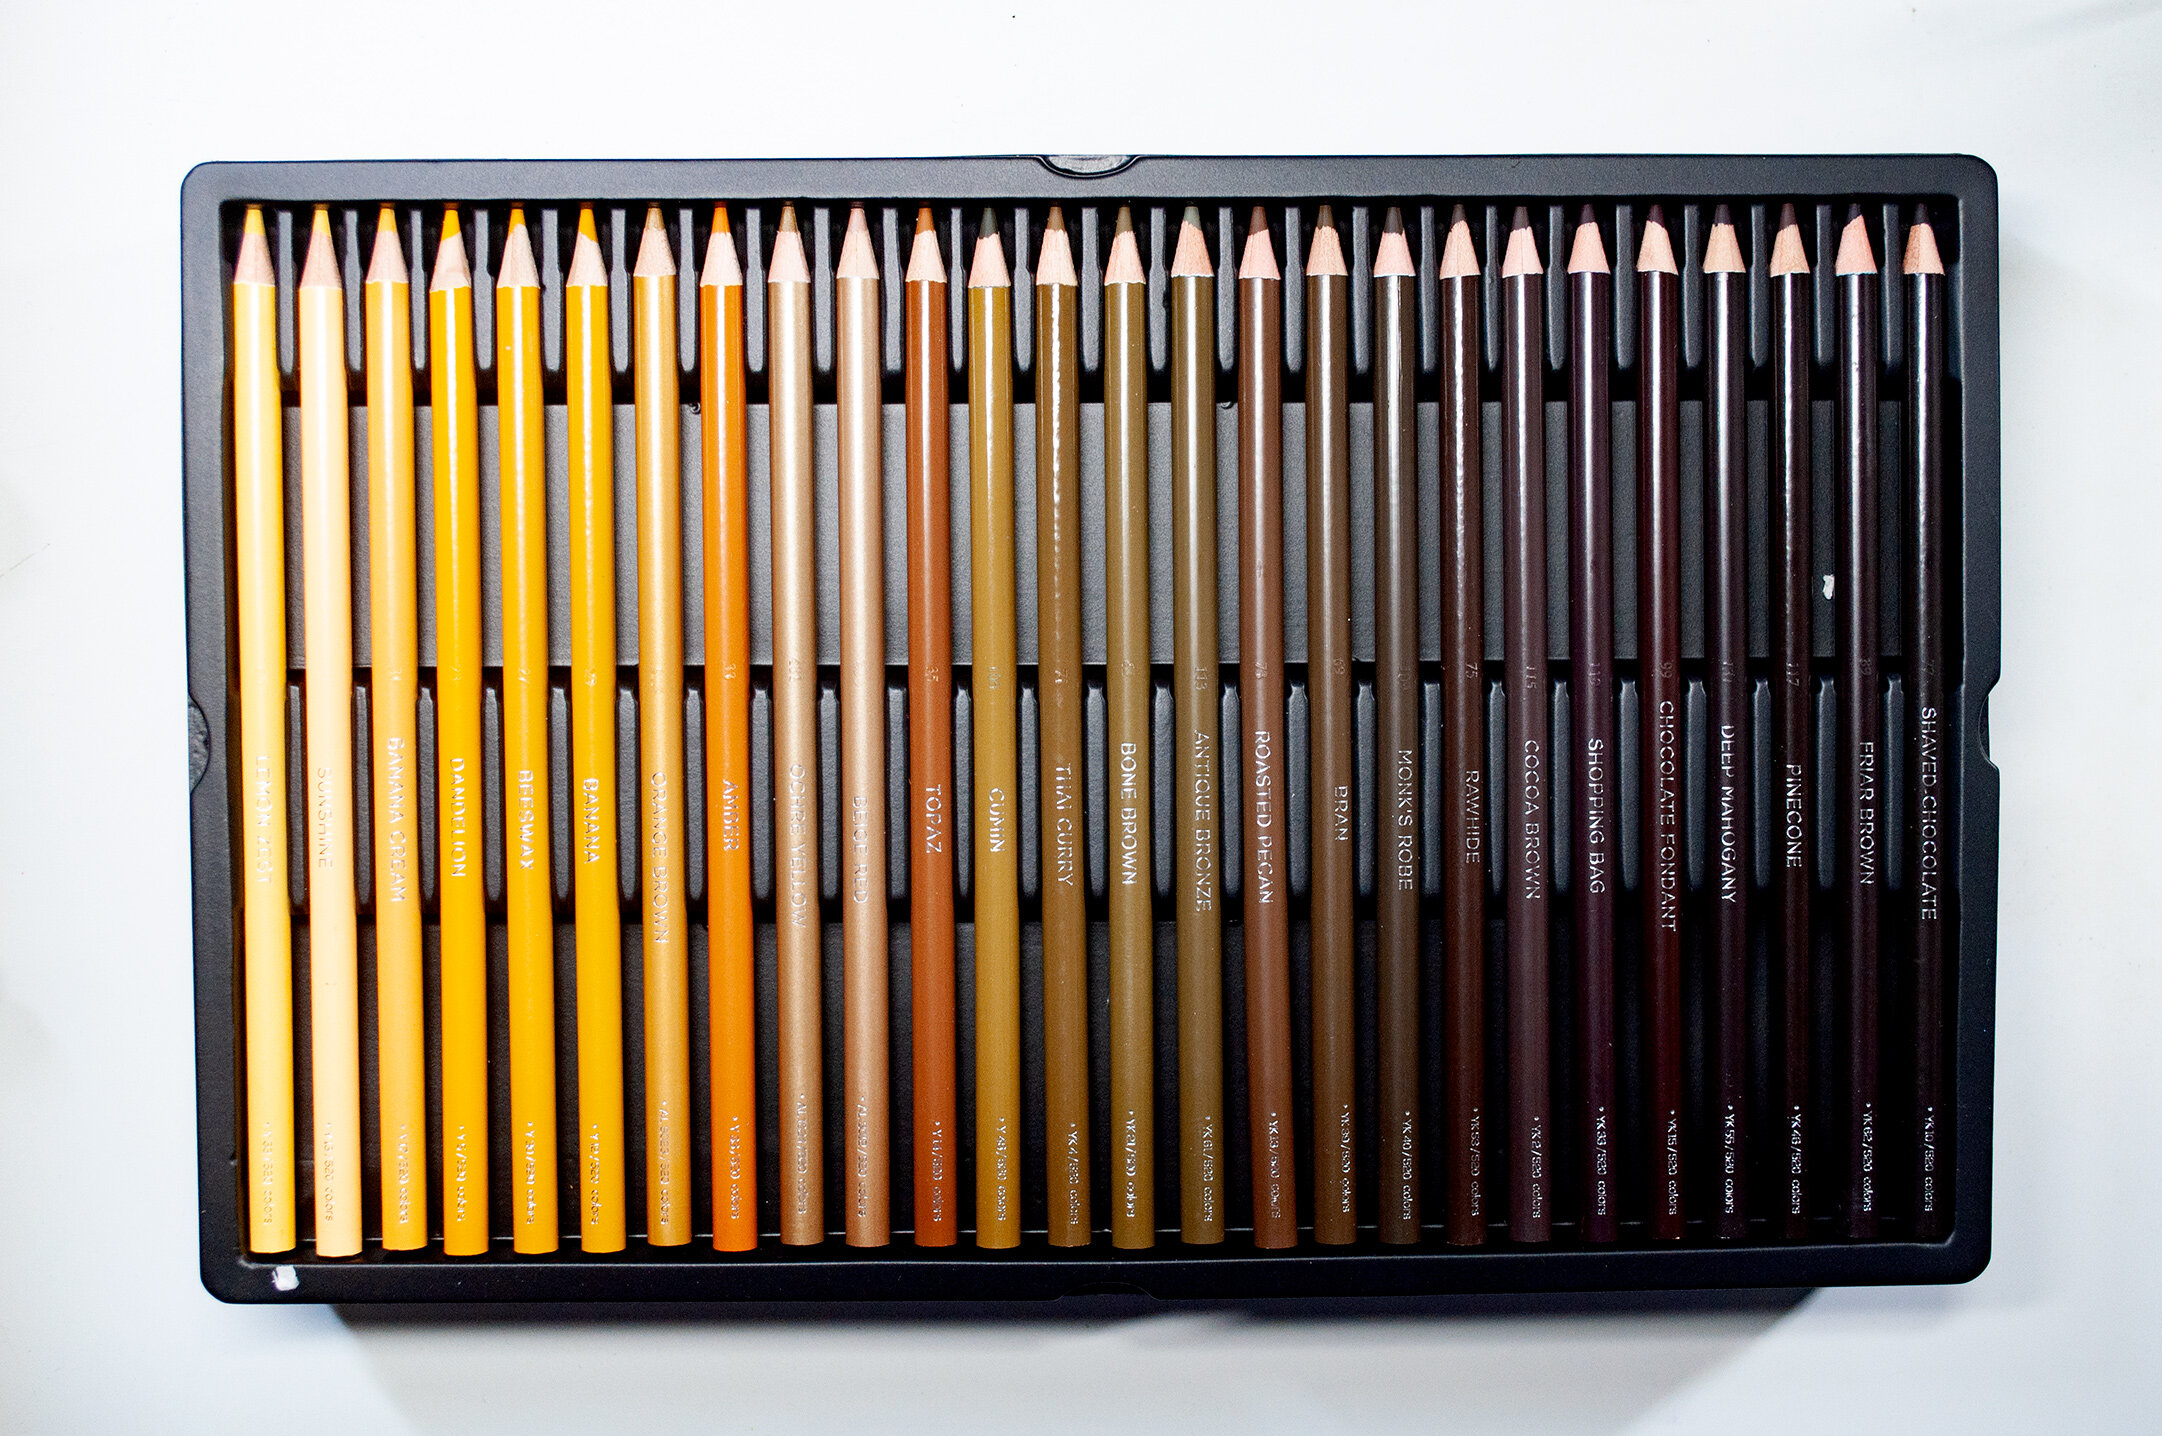 Andstal Brutfuner 520 Colors Colored Pencils Professional Drawing Color  Pencil Set 260 For Artist Coloring Sketch Art Supplies